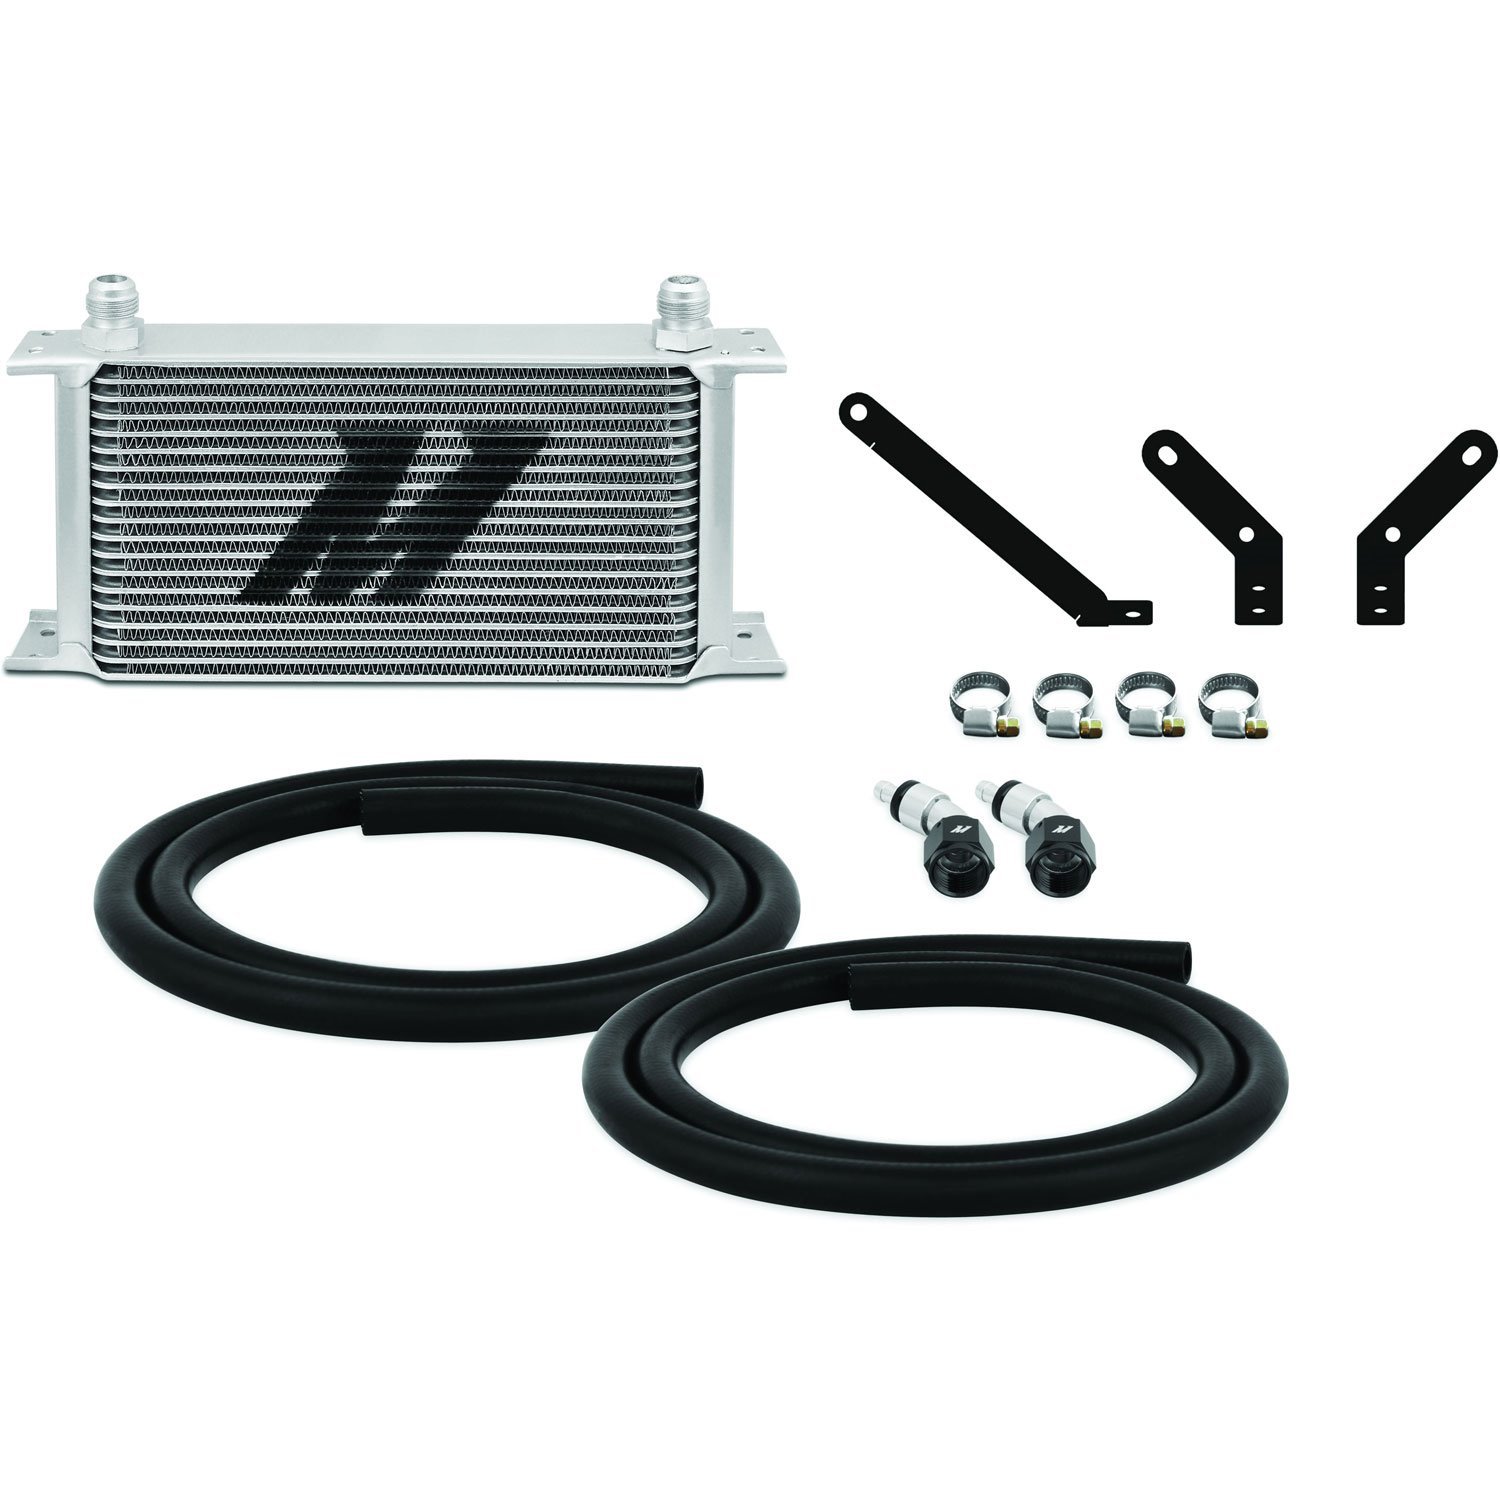 Subaru WRX CVT Transmission Cooler - MFG Part No. MMTC-WRX-15